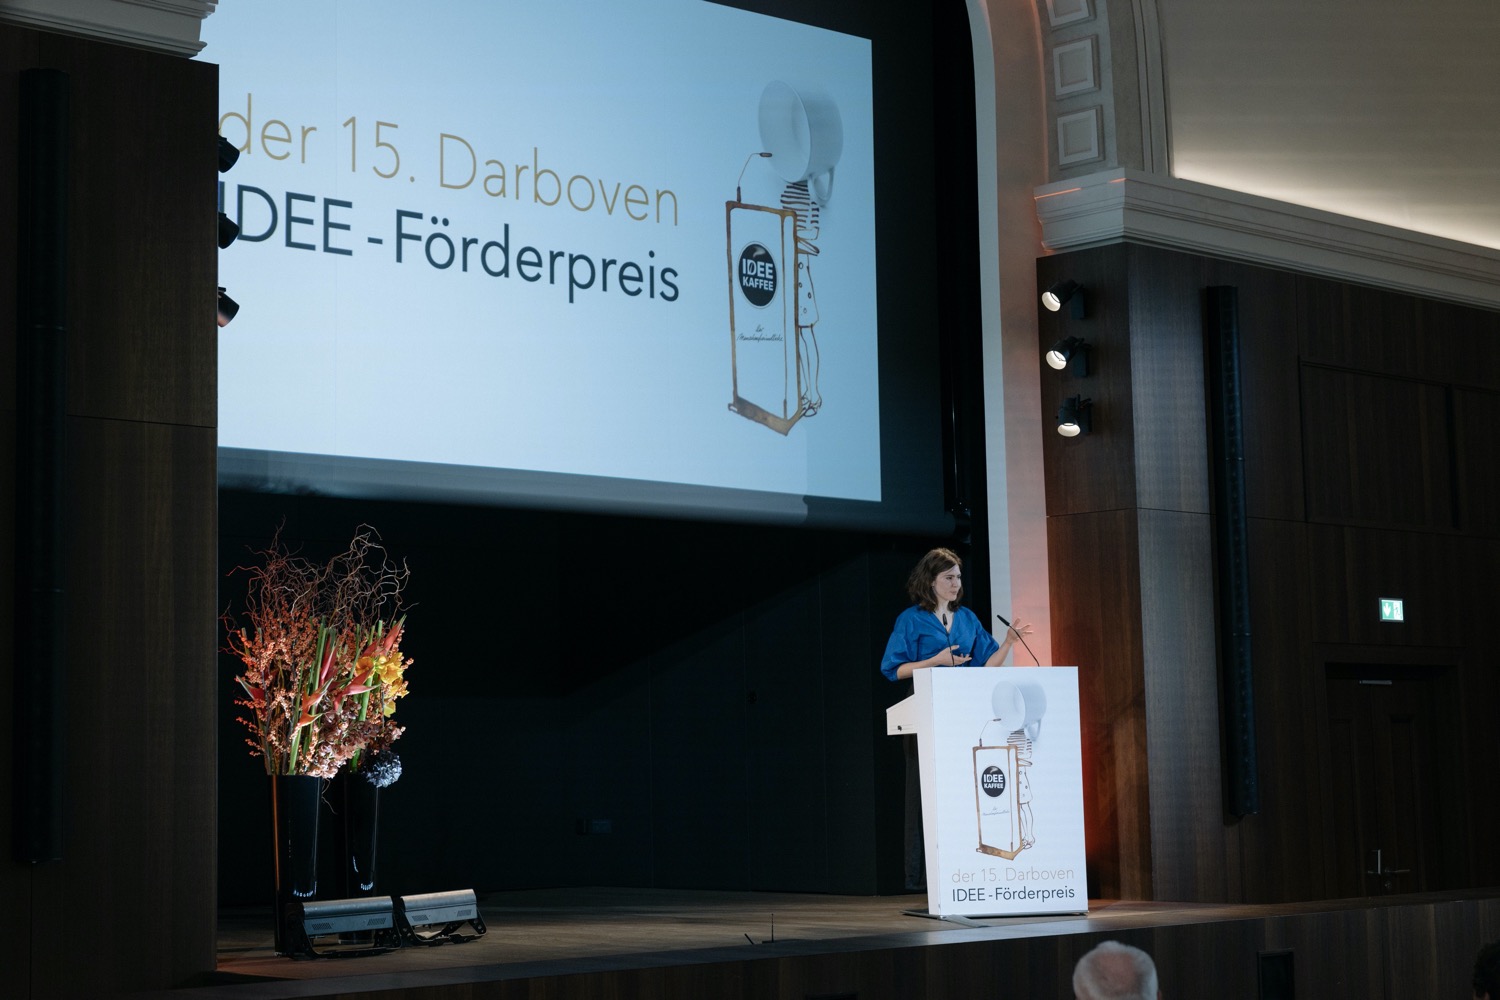  Preisverleihung des 15. Darboven IDEE-Förderpreis in Hamburg - Rede 